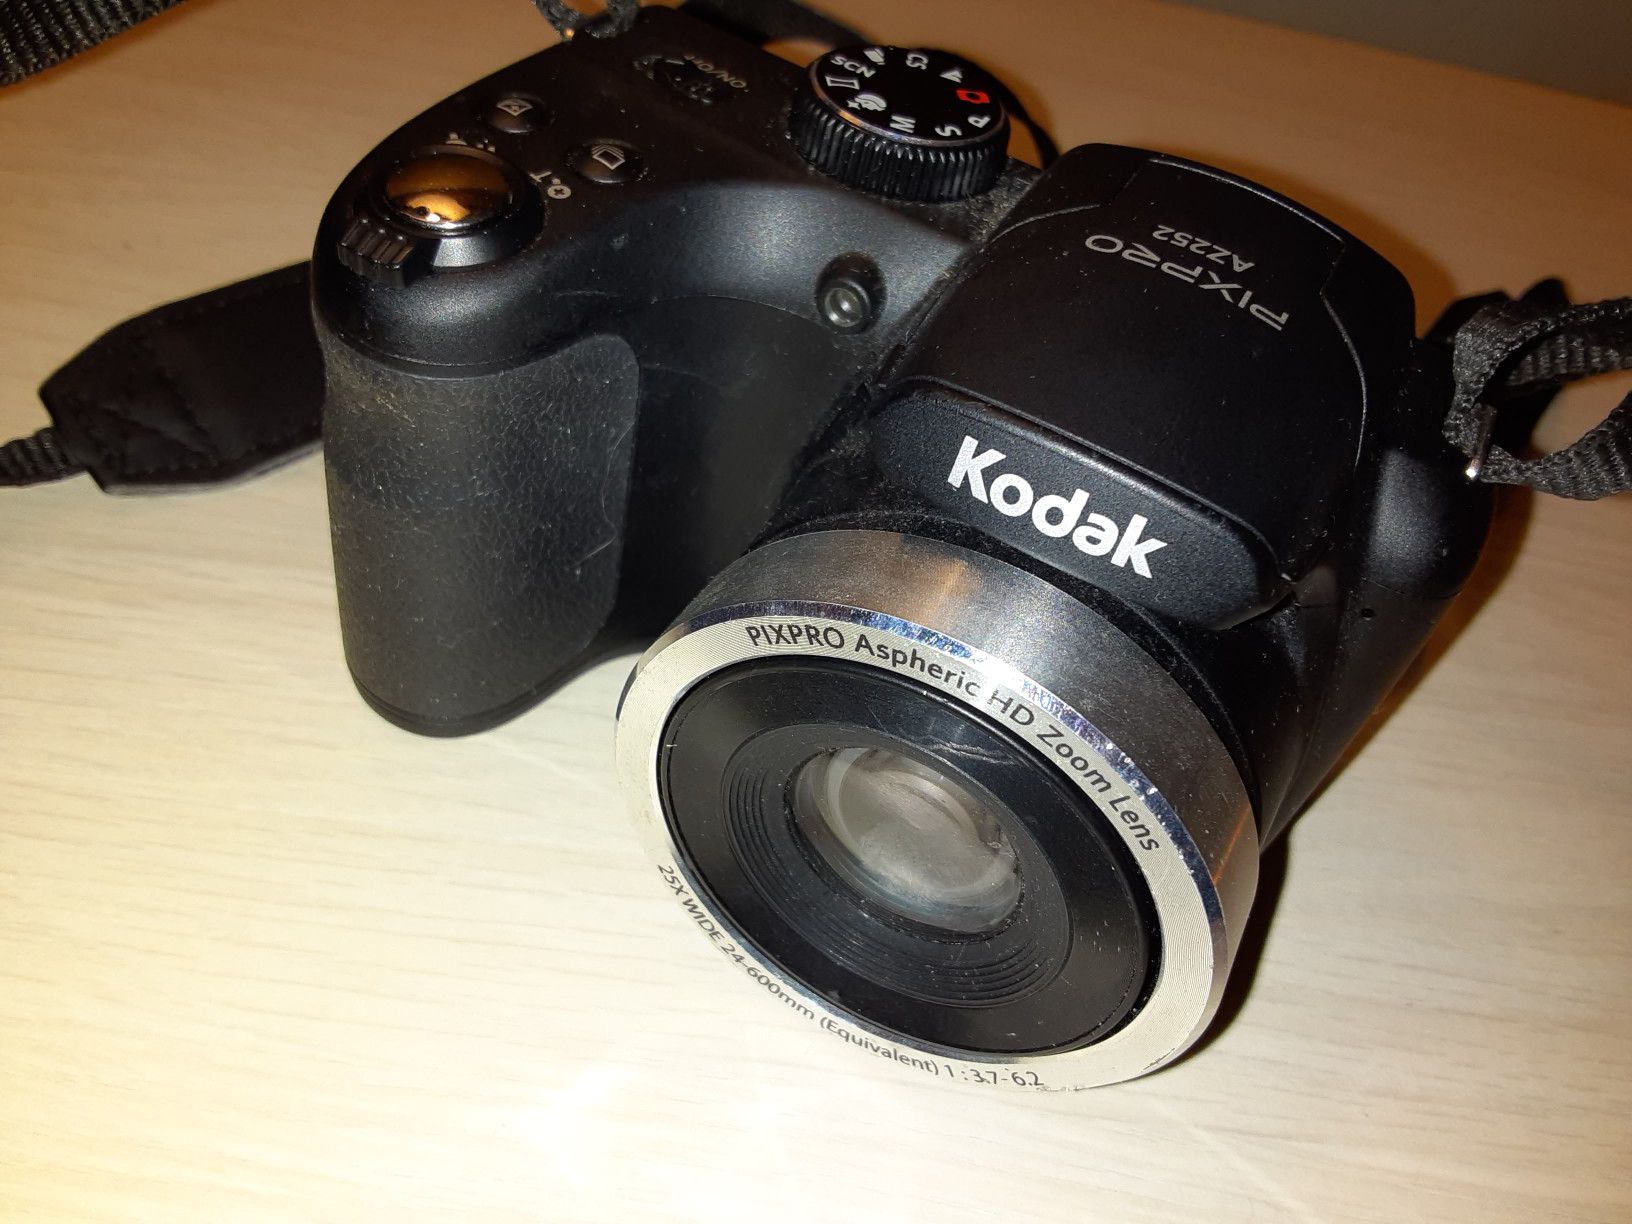 Kodak pixpro az252 digital camera